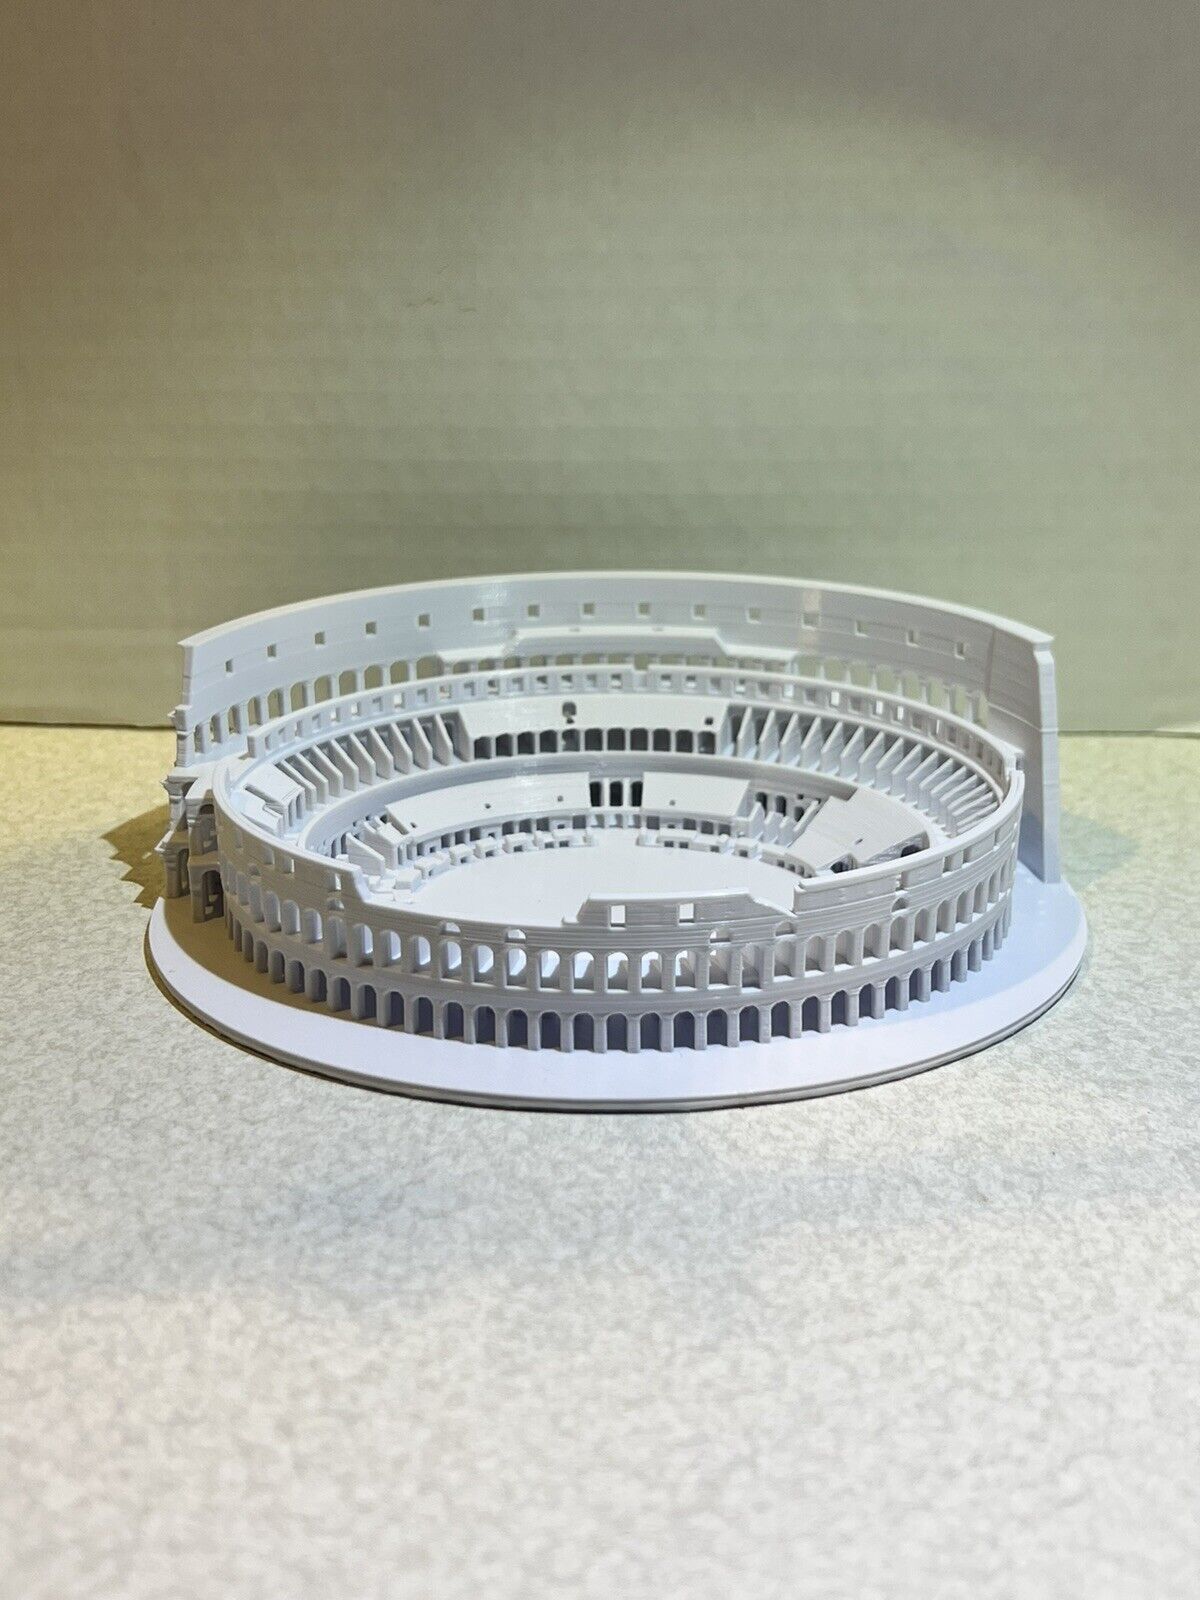 Ancient Rome Italy Colosseum / Coliseum 3D Printed PLA Plastic